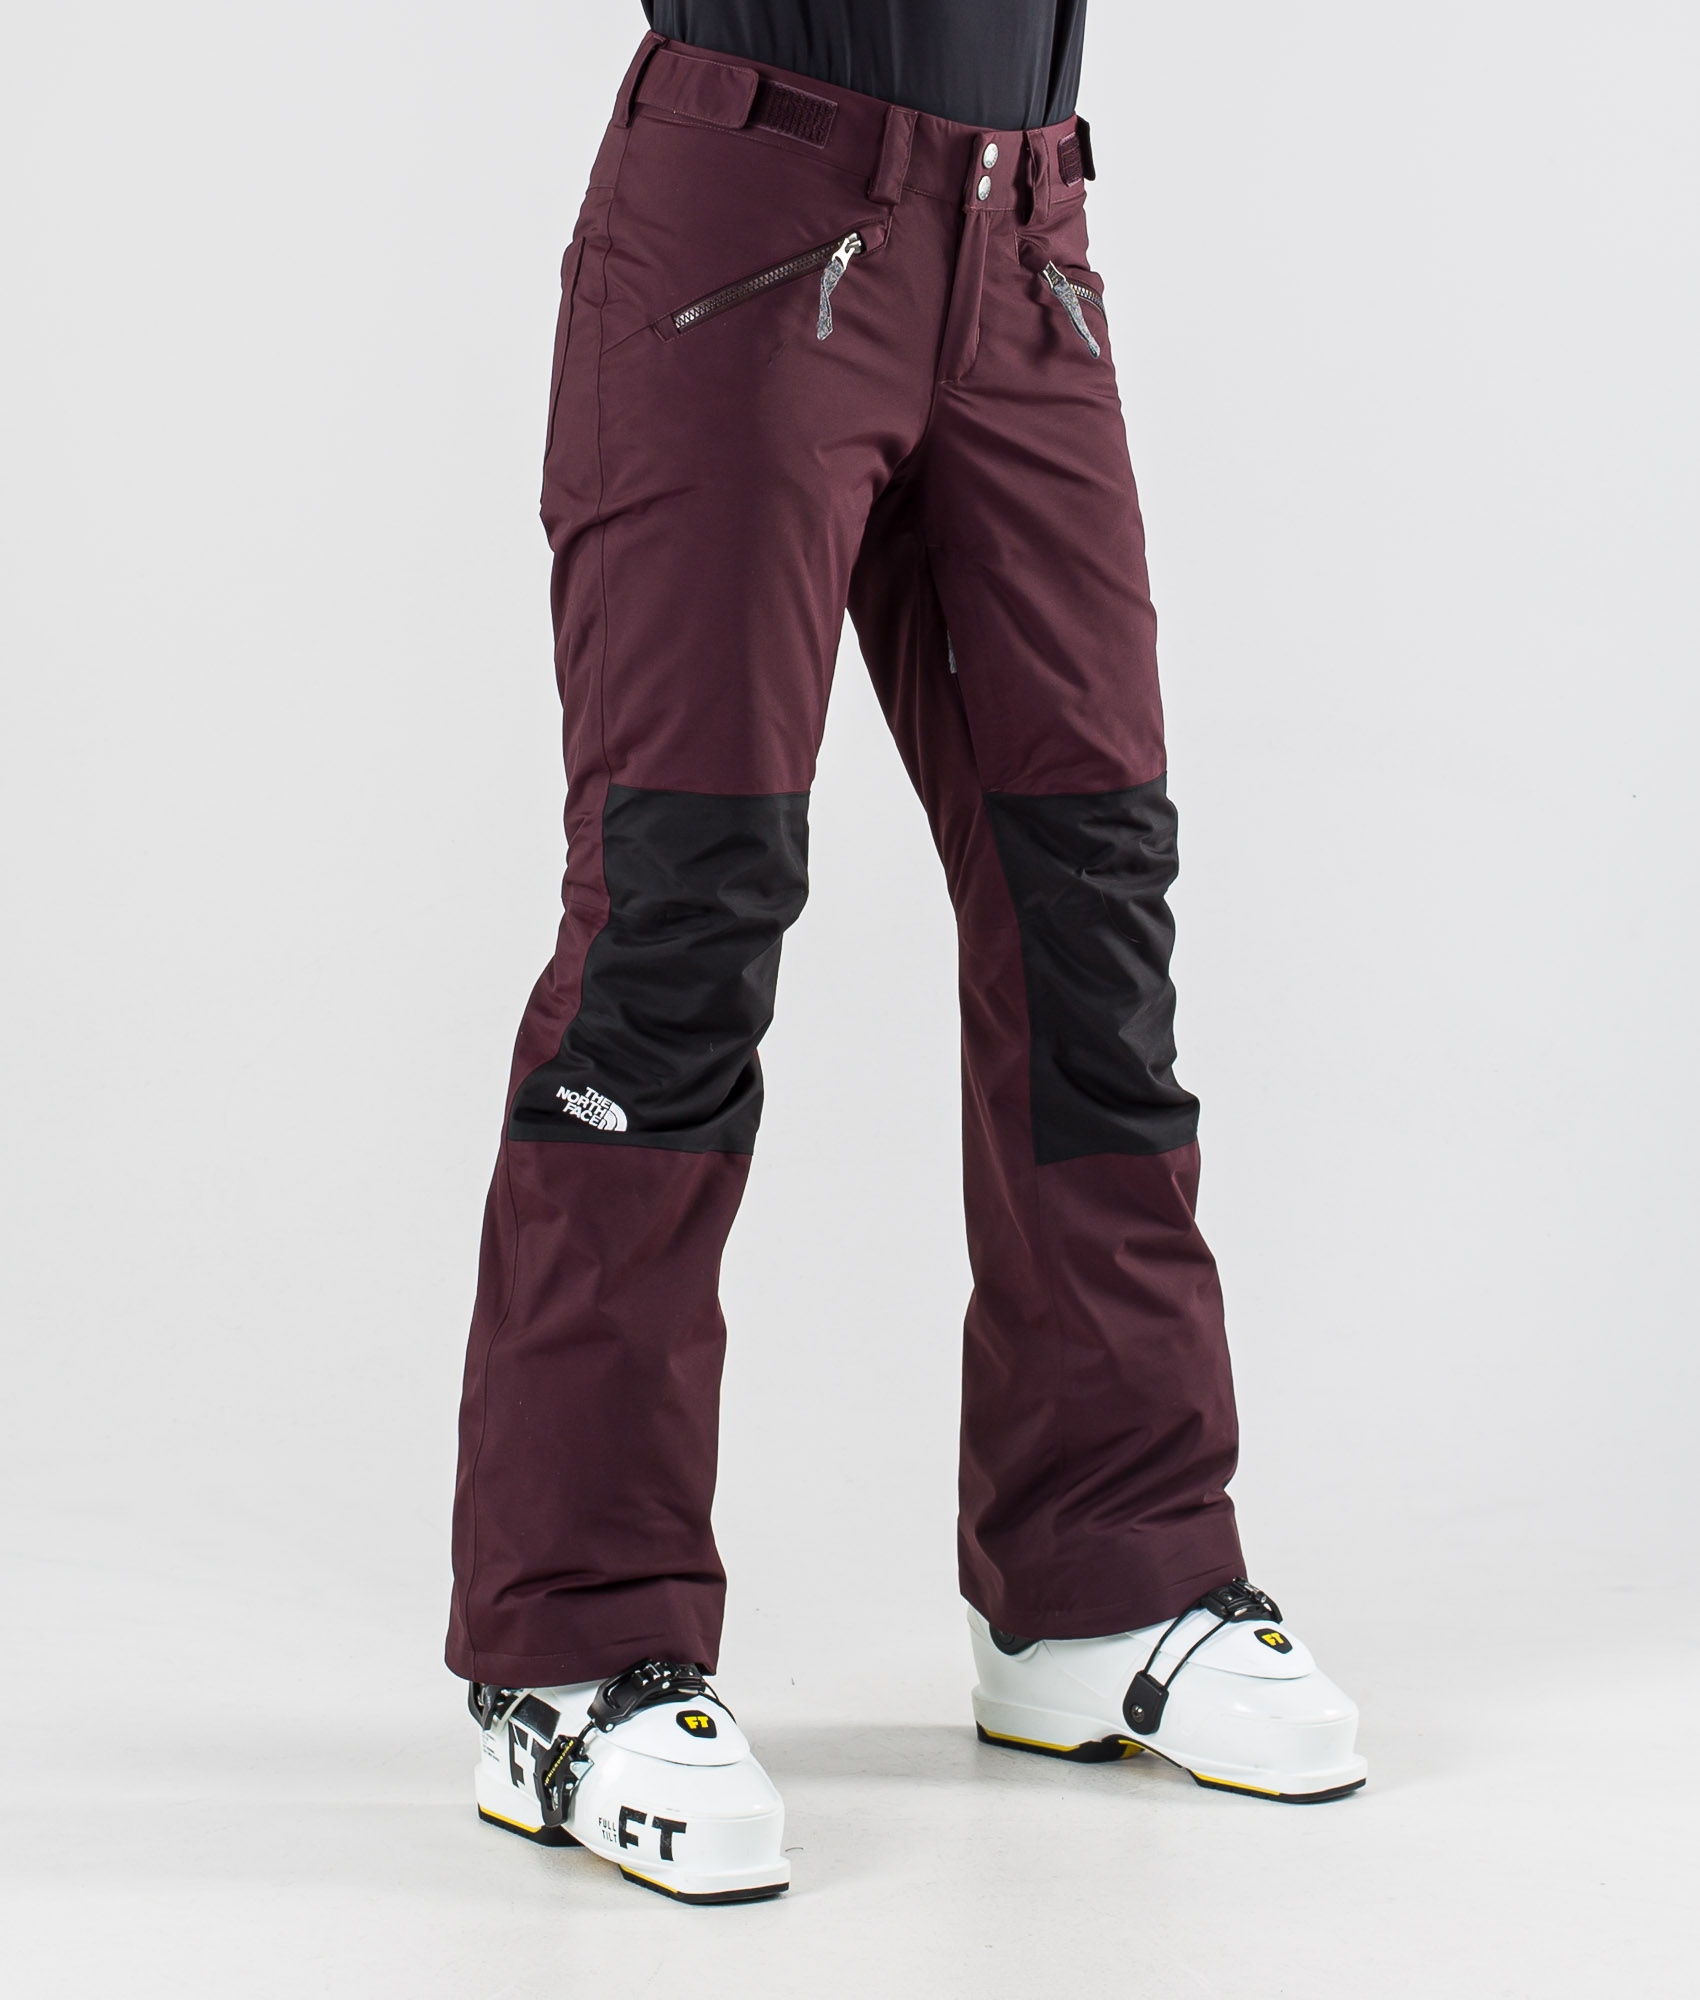 north face purple ski pants